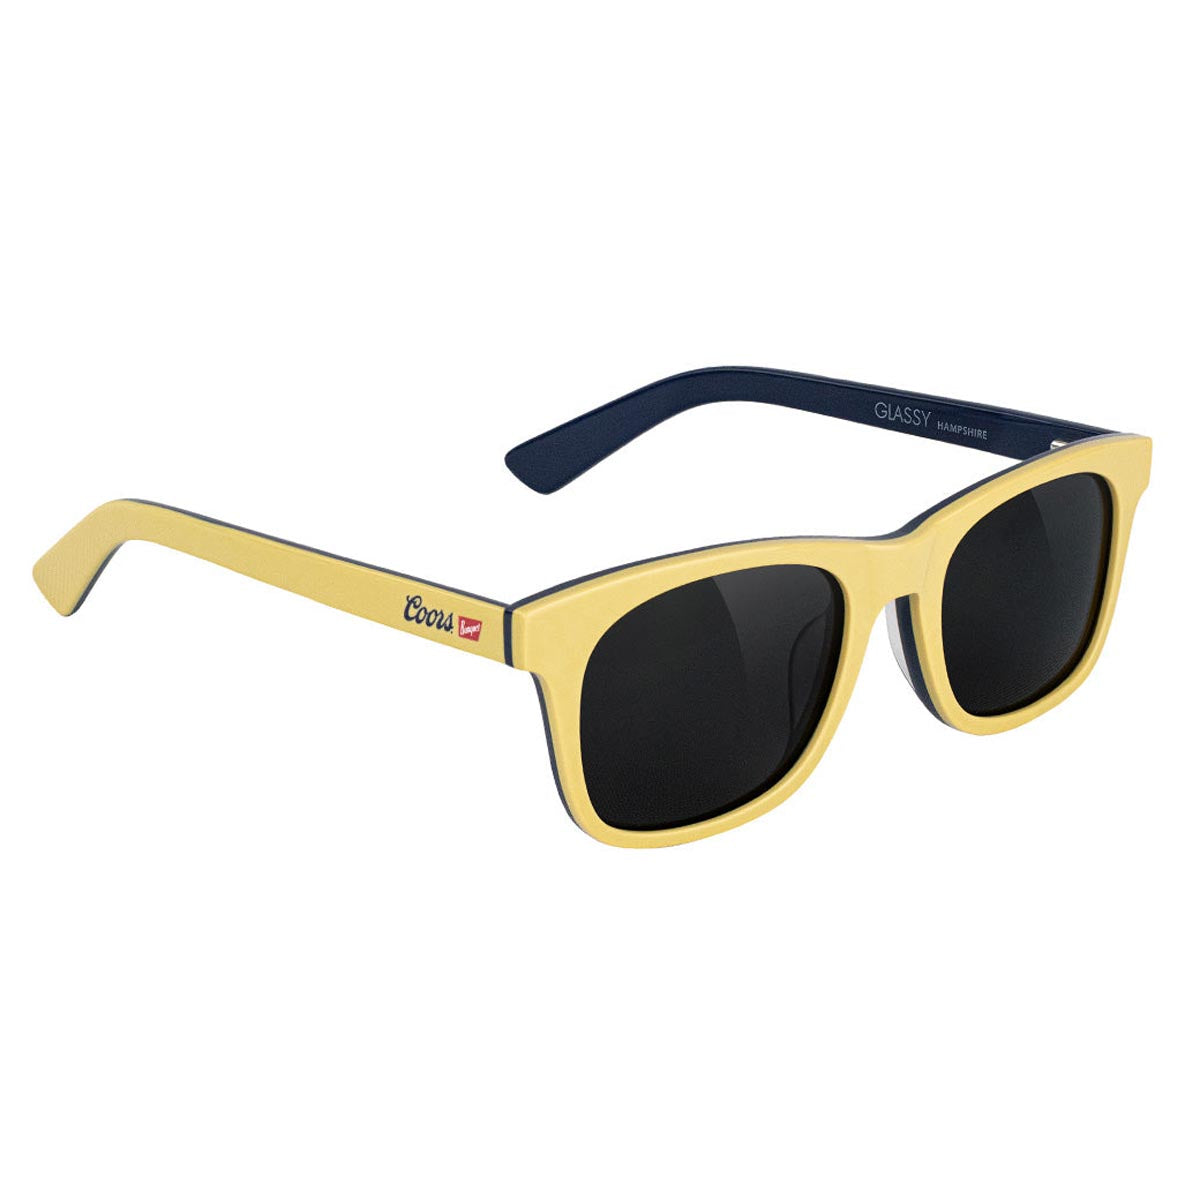 Glassy x Coors Banquet Hampshire Sunglasses - Buff image 1